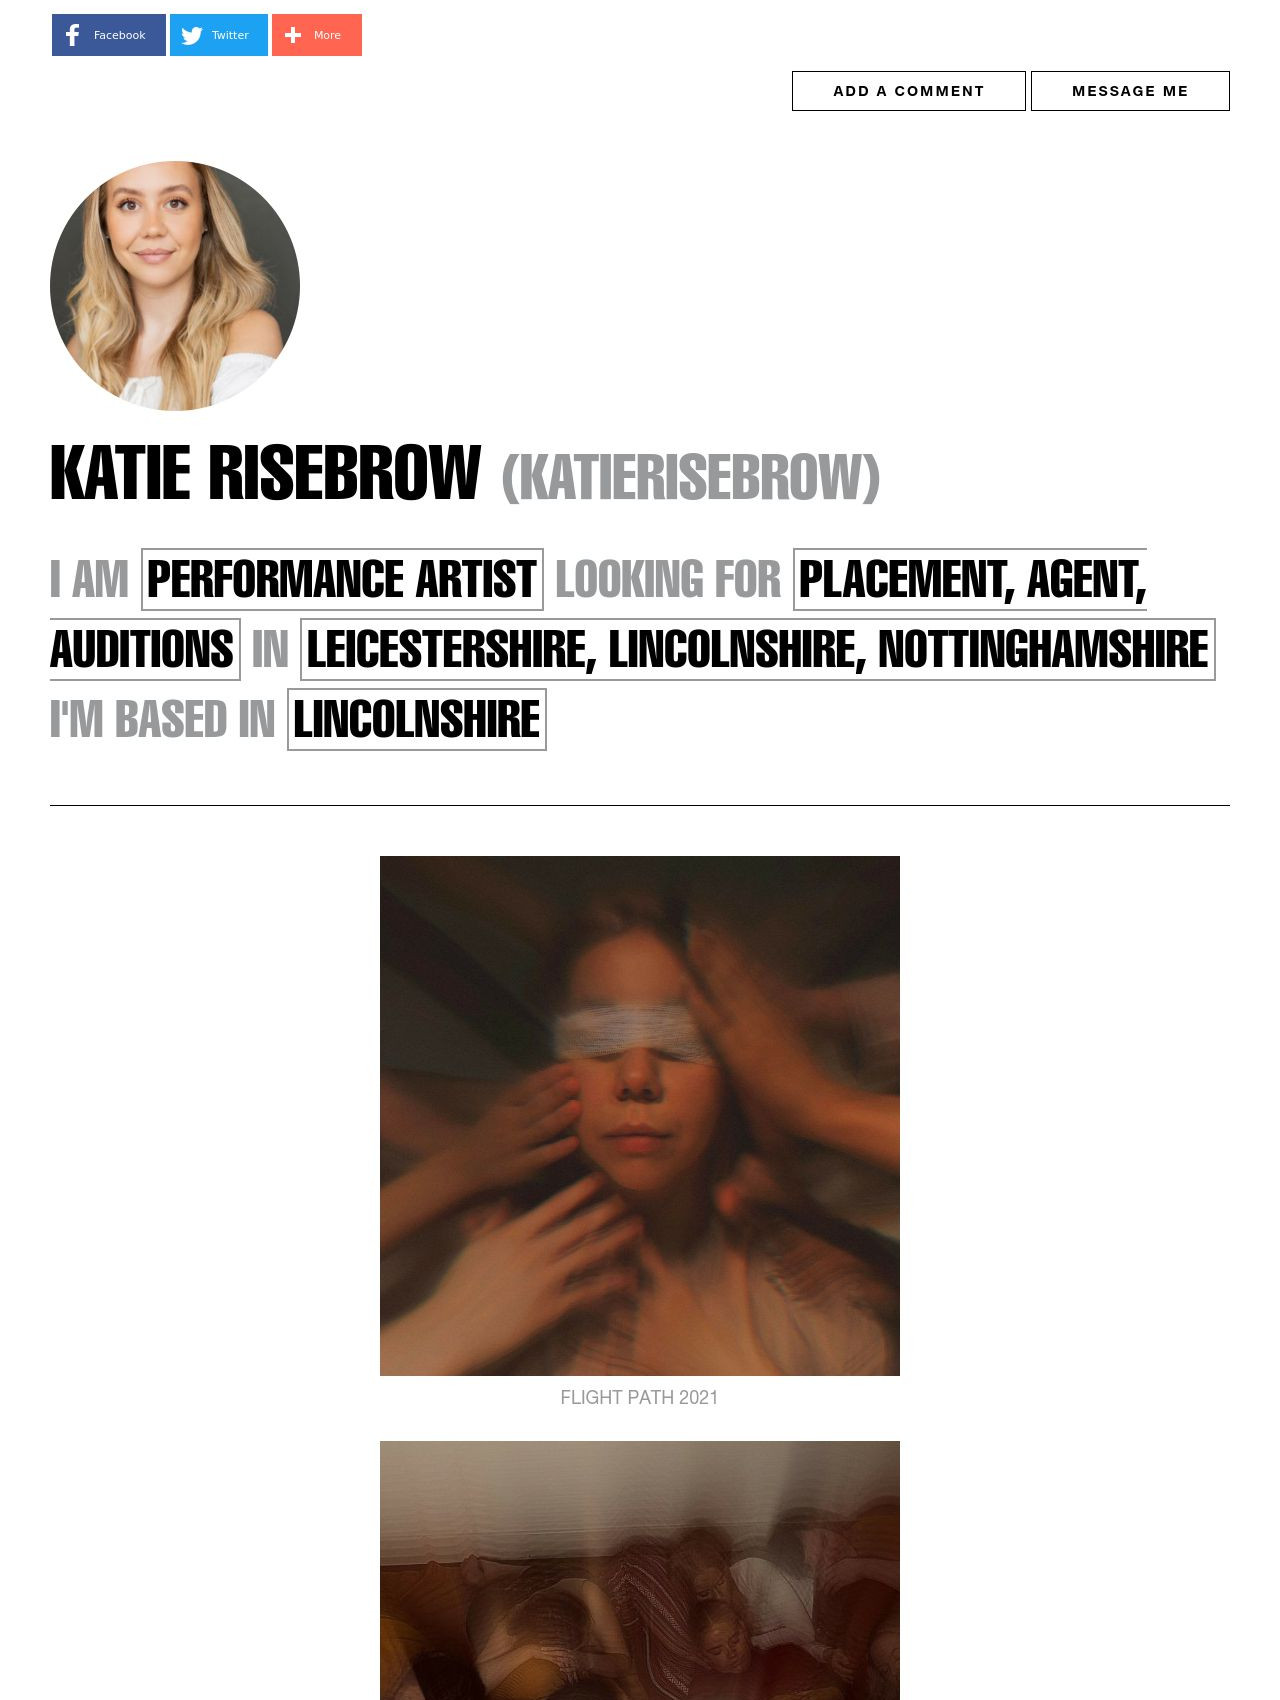 Katie Risebrow